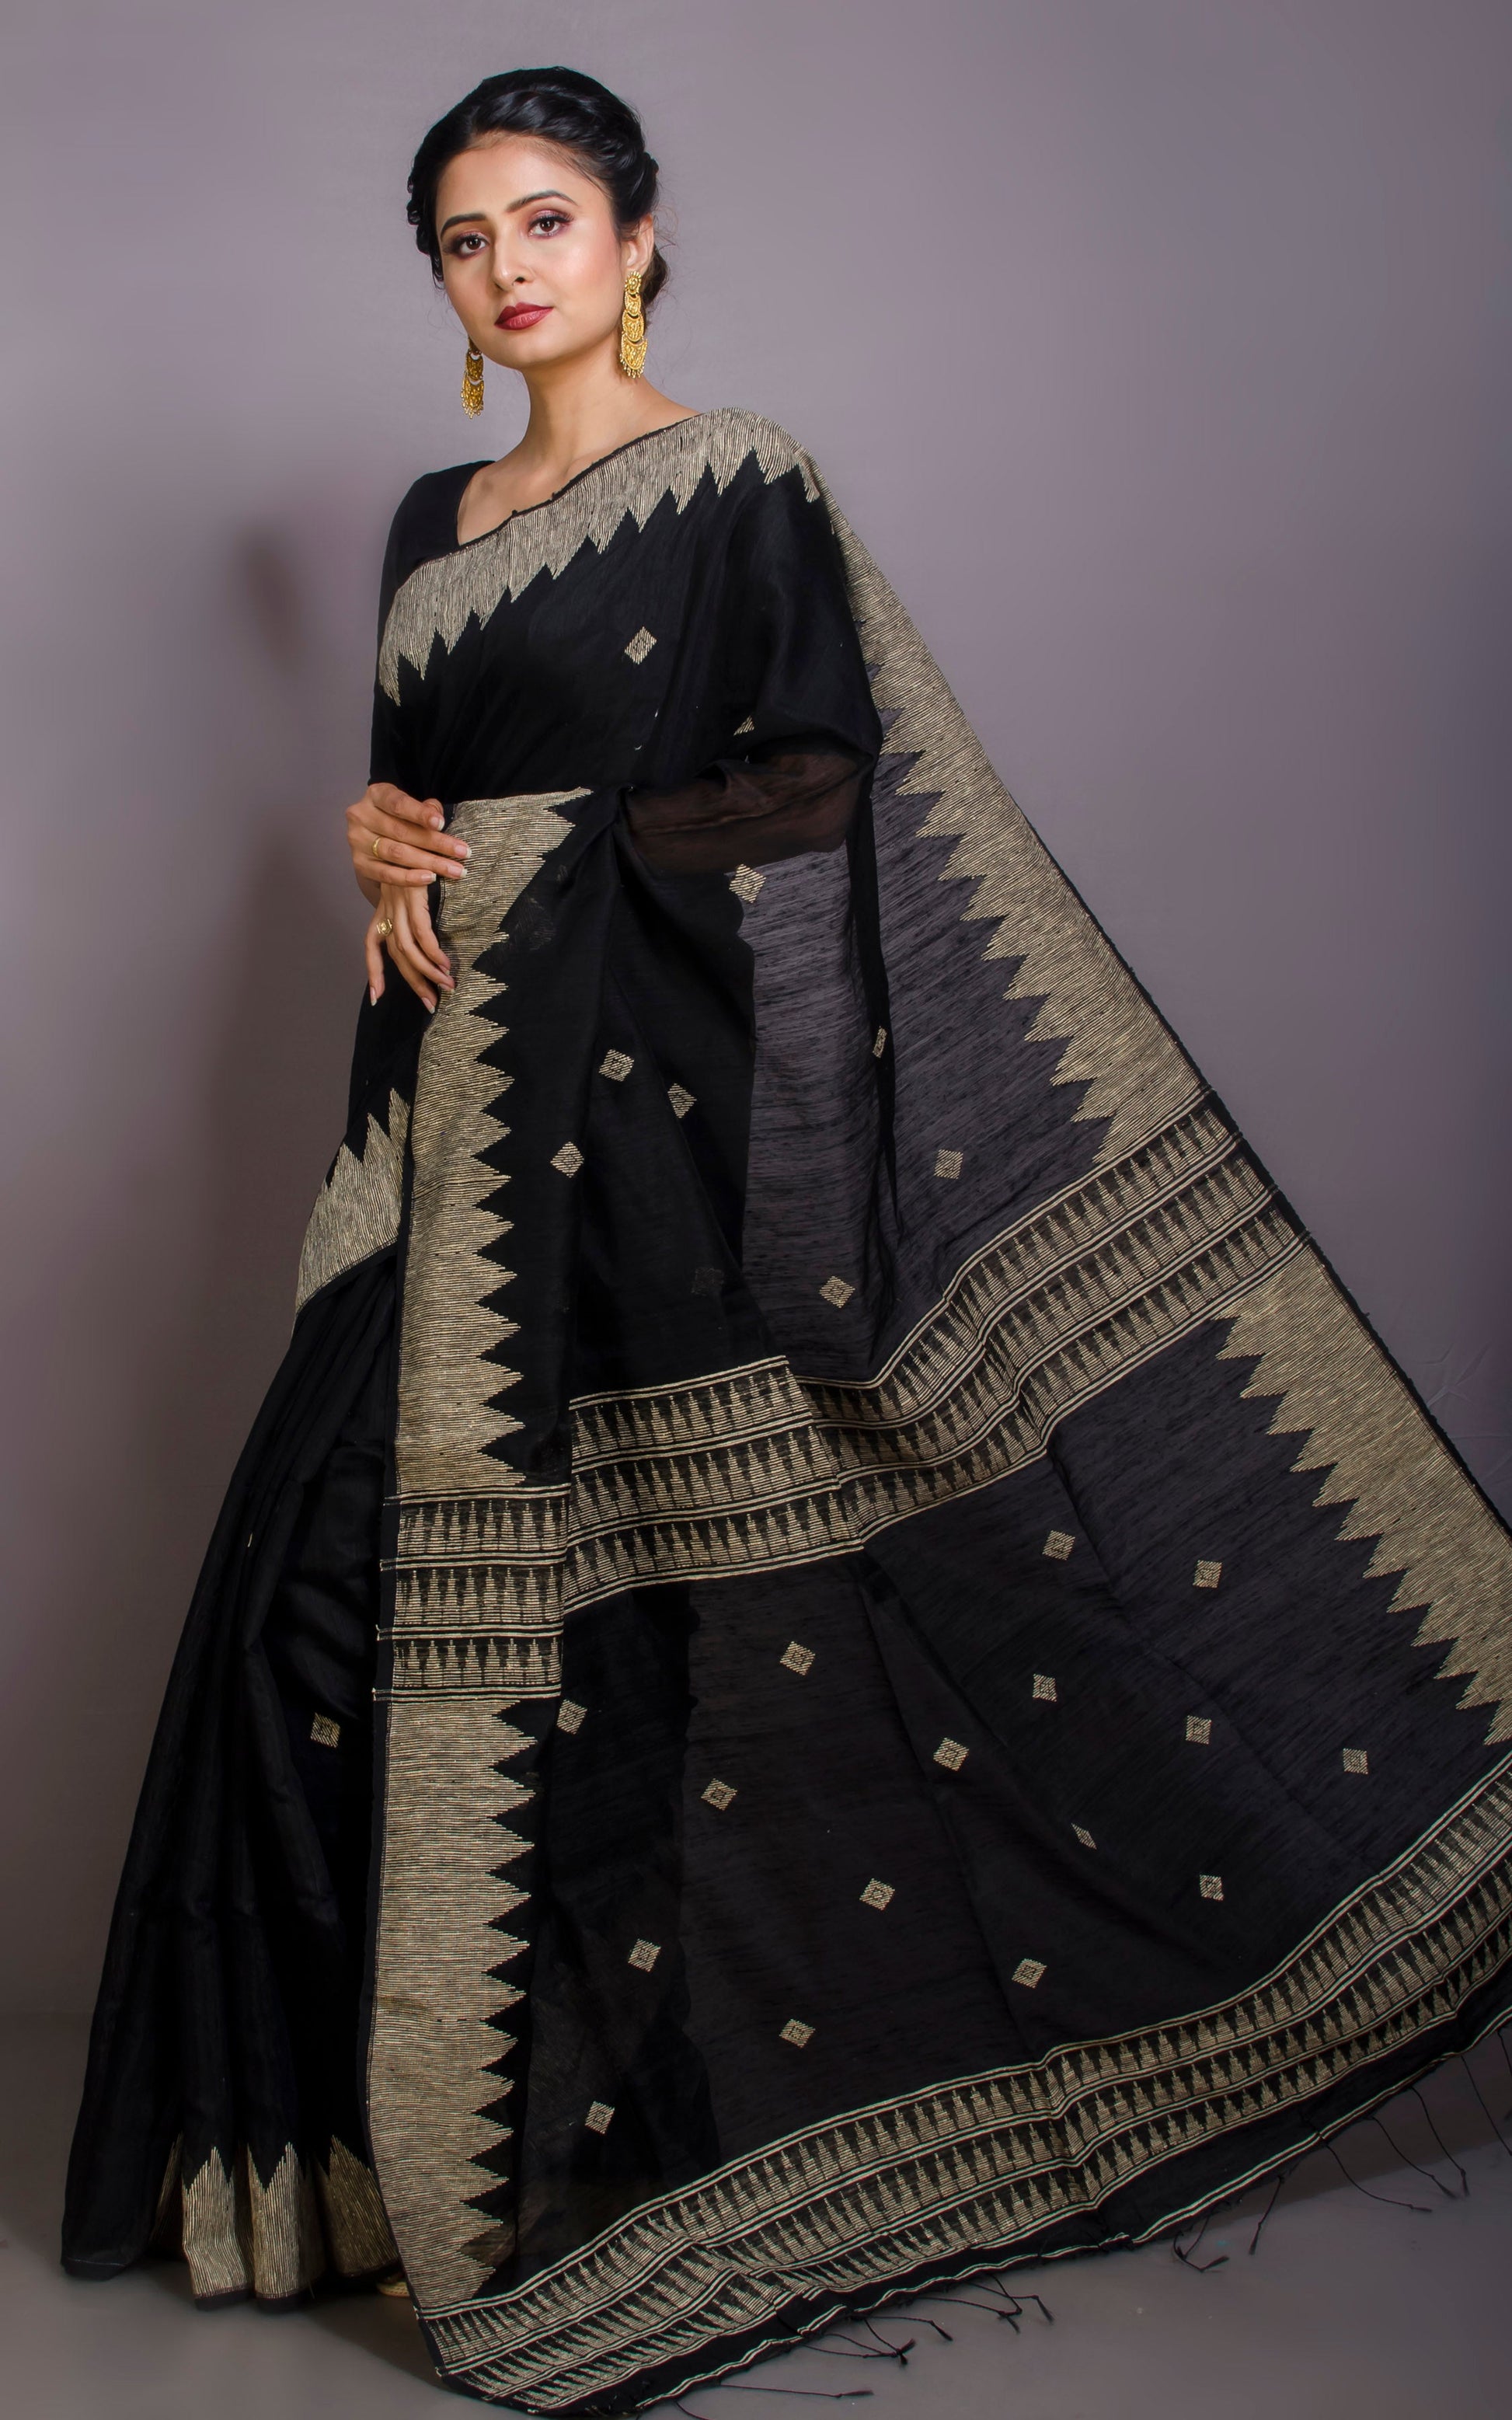 Woven Jute Work Matka Tussar Saree in Black and Natural Jute Color